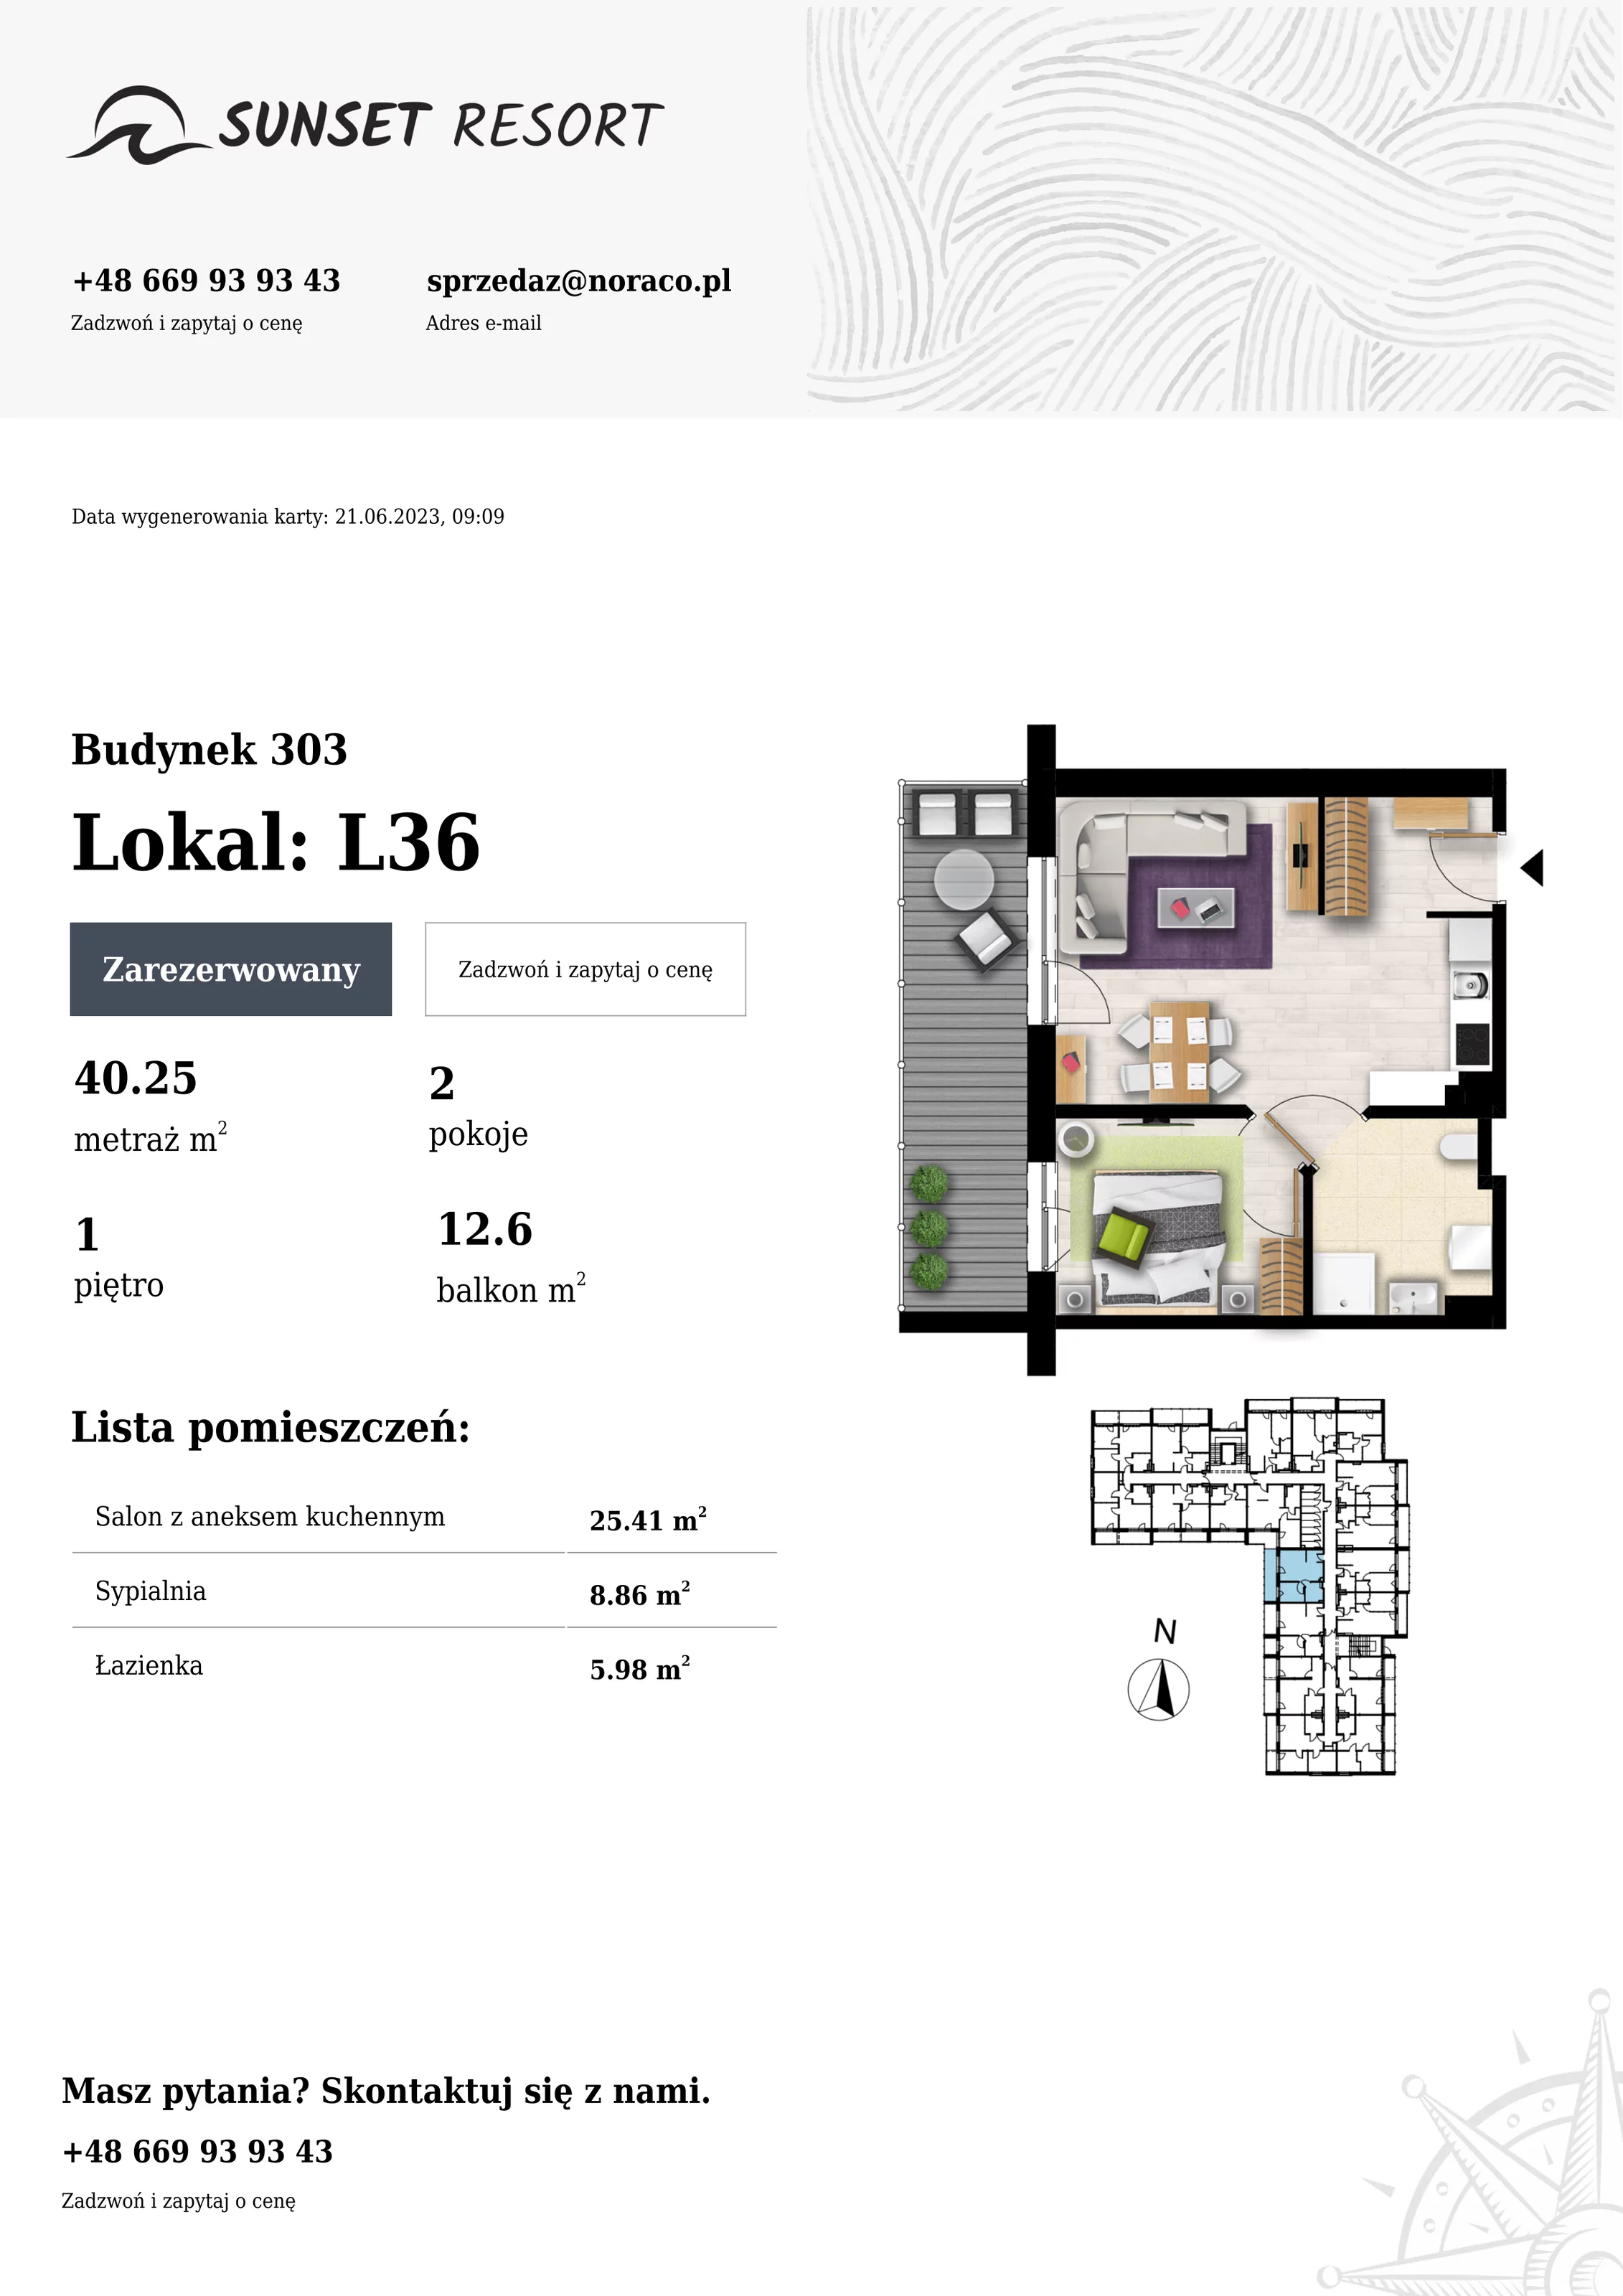 Apartament 40,25 m², piętro 1, oferta nr L36, Sunset Resort, Grzybowo, ul. Nadmorska 106